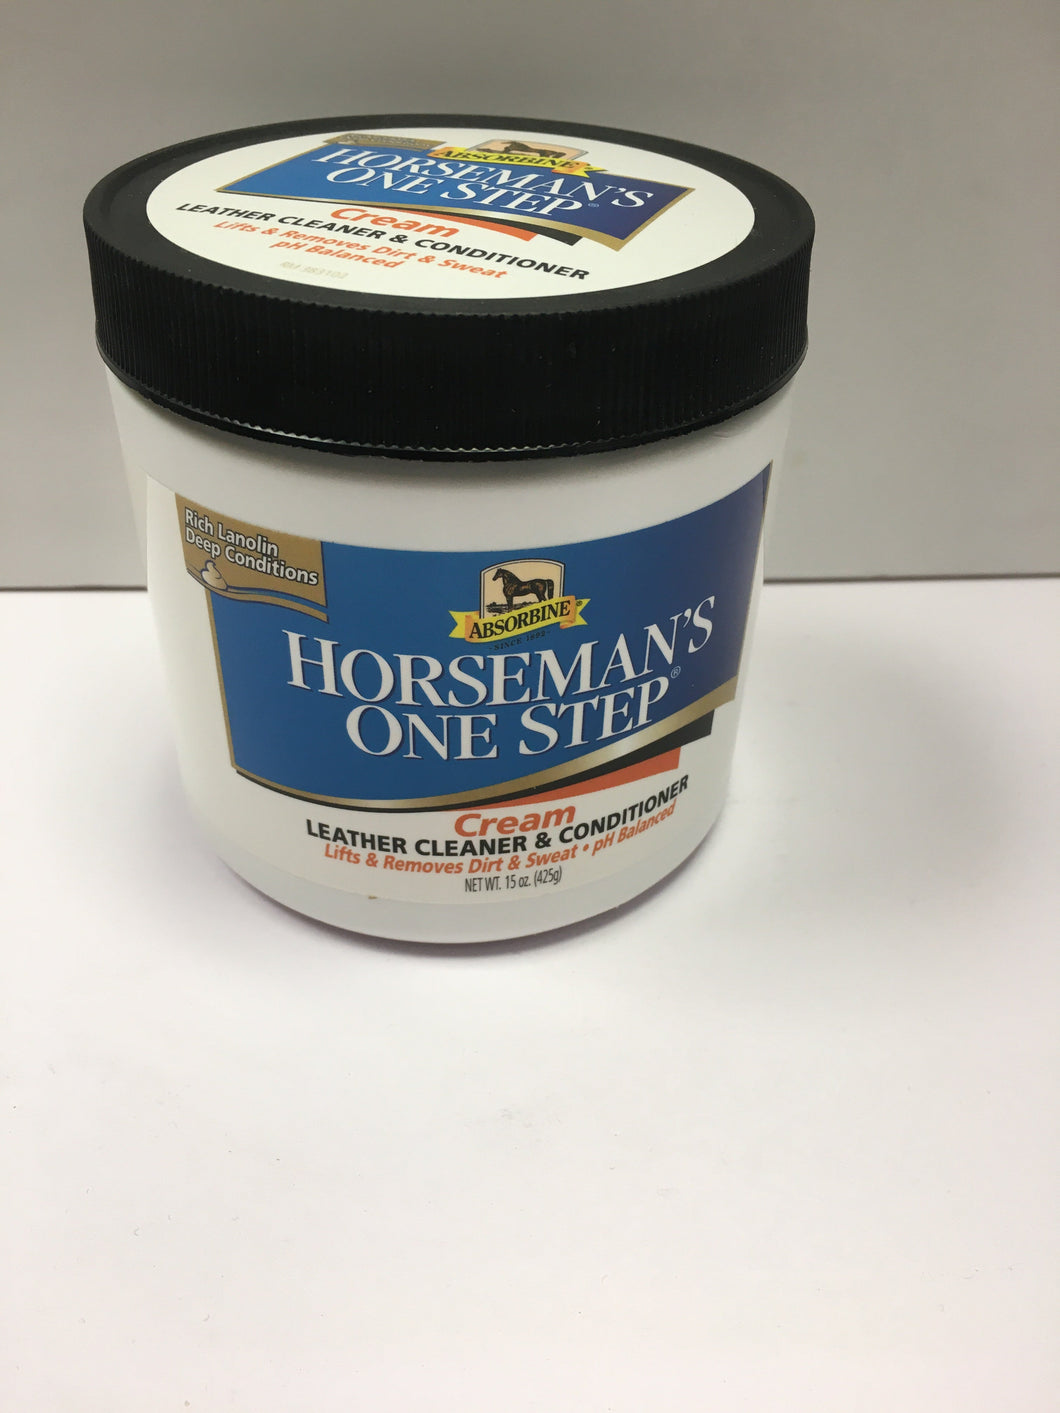 Horseman’s one step cream leather conditioner